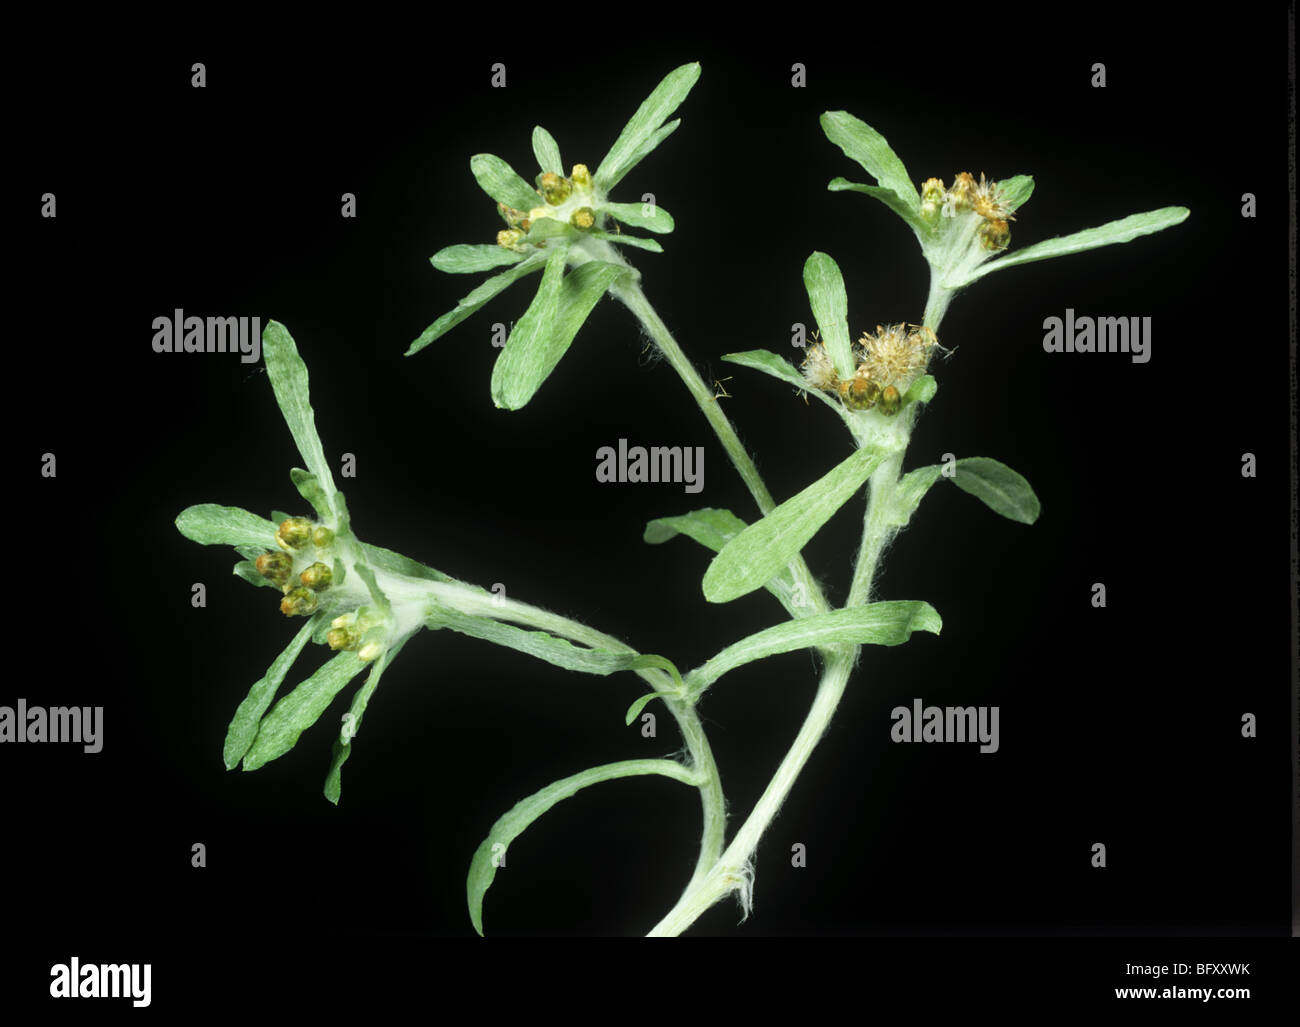 Marsh cudweed (Gnaphalium ulignosum) flowers against a black background Stock Photo